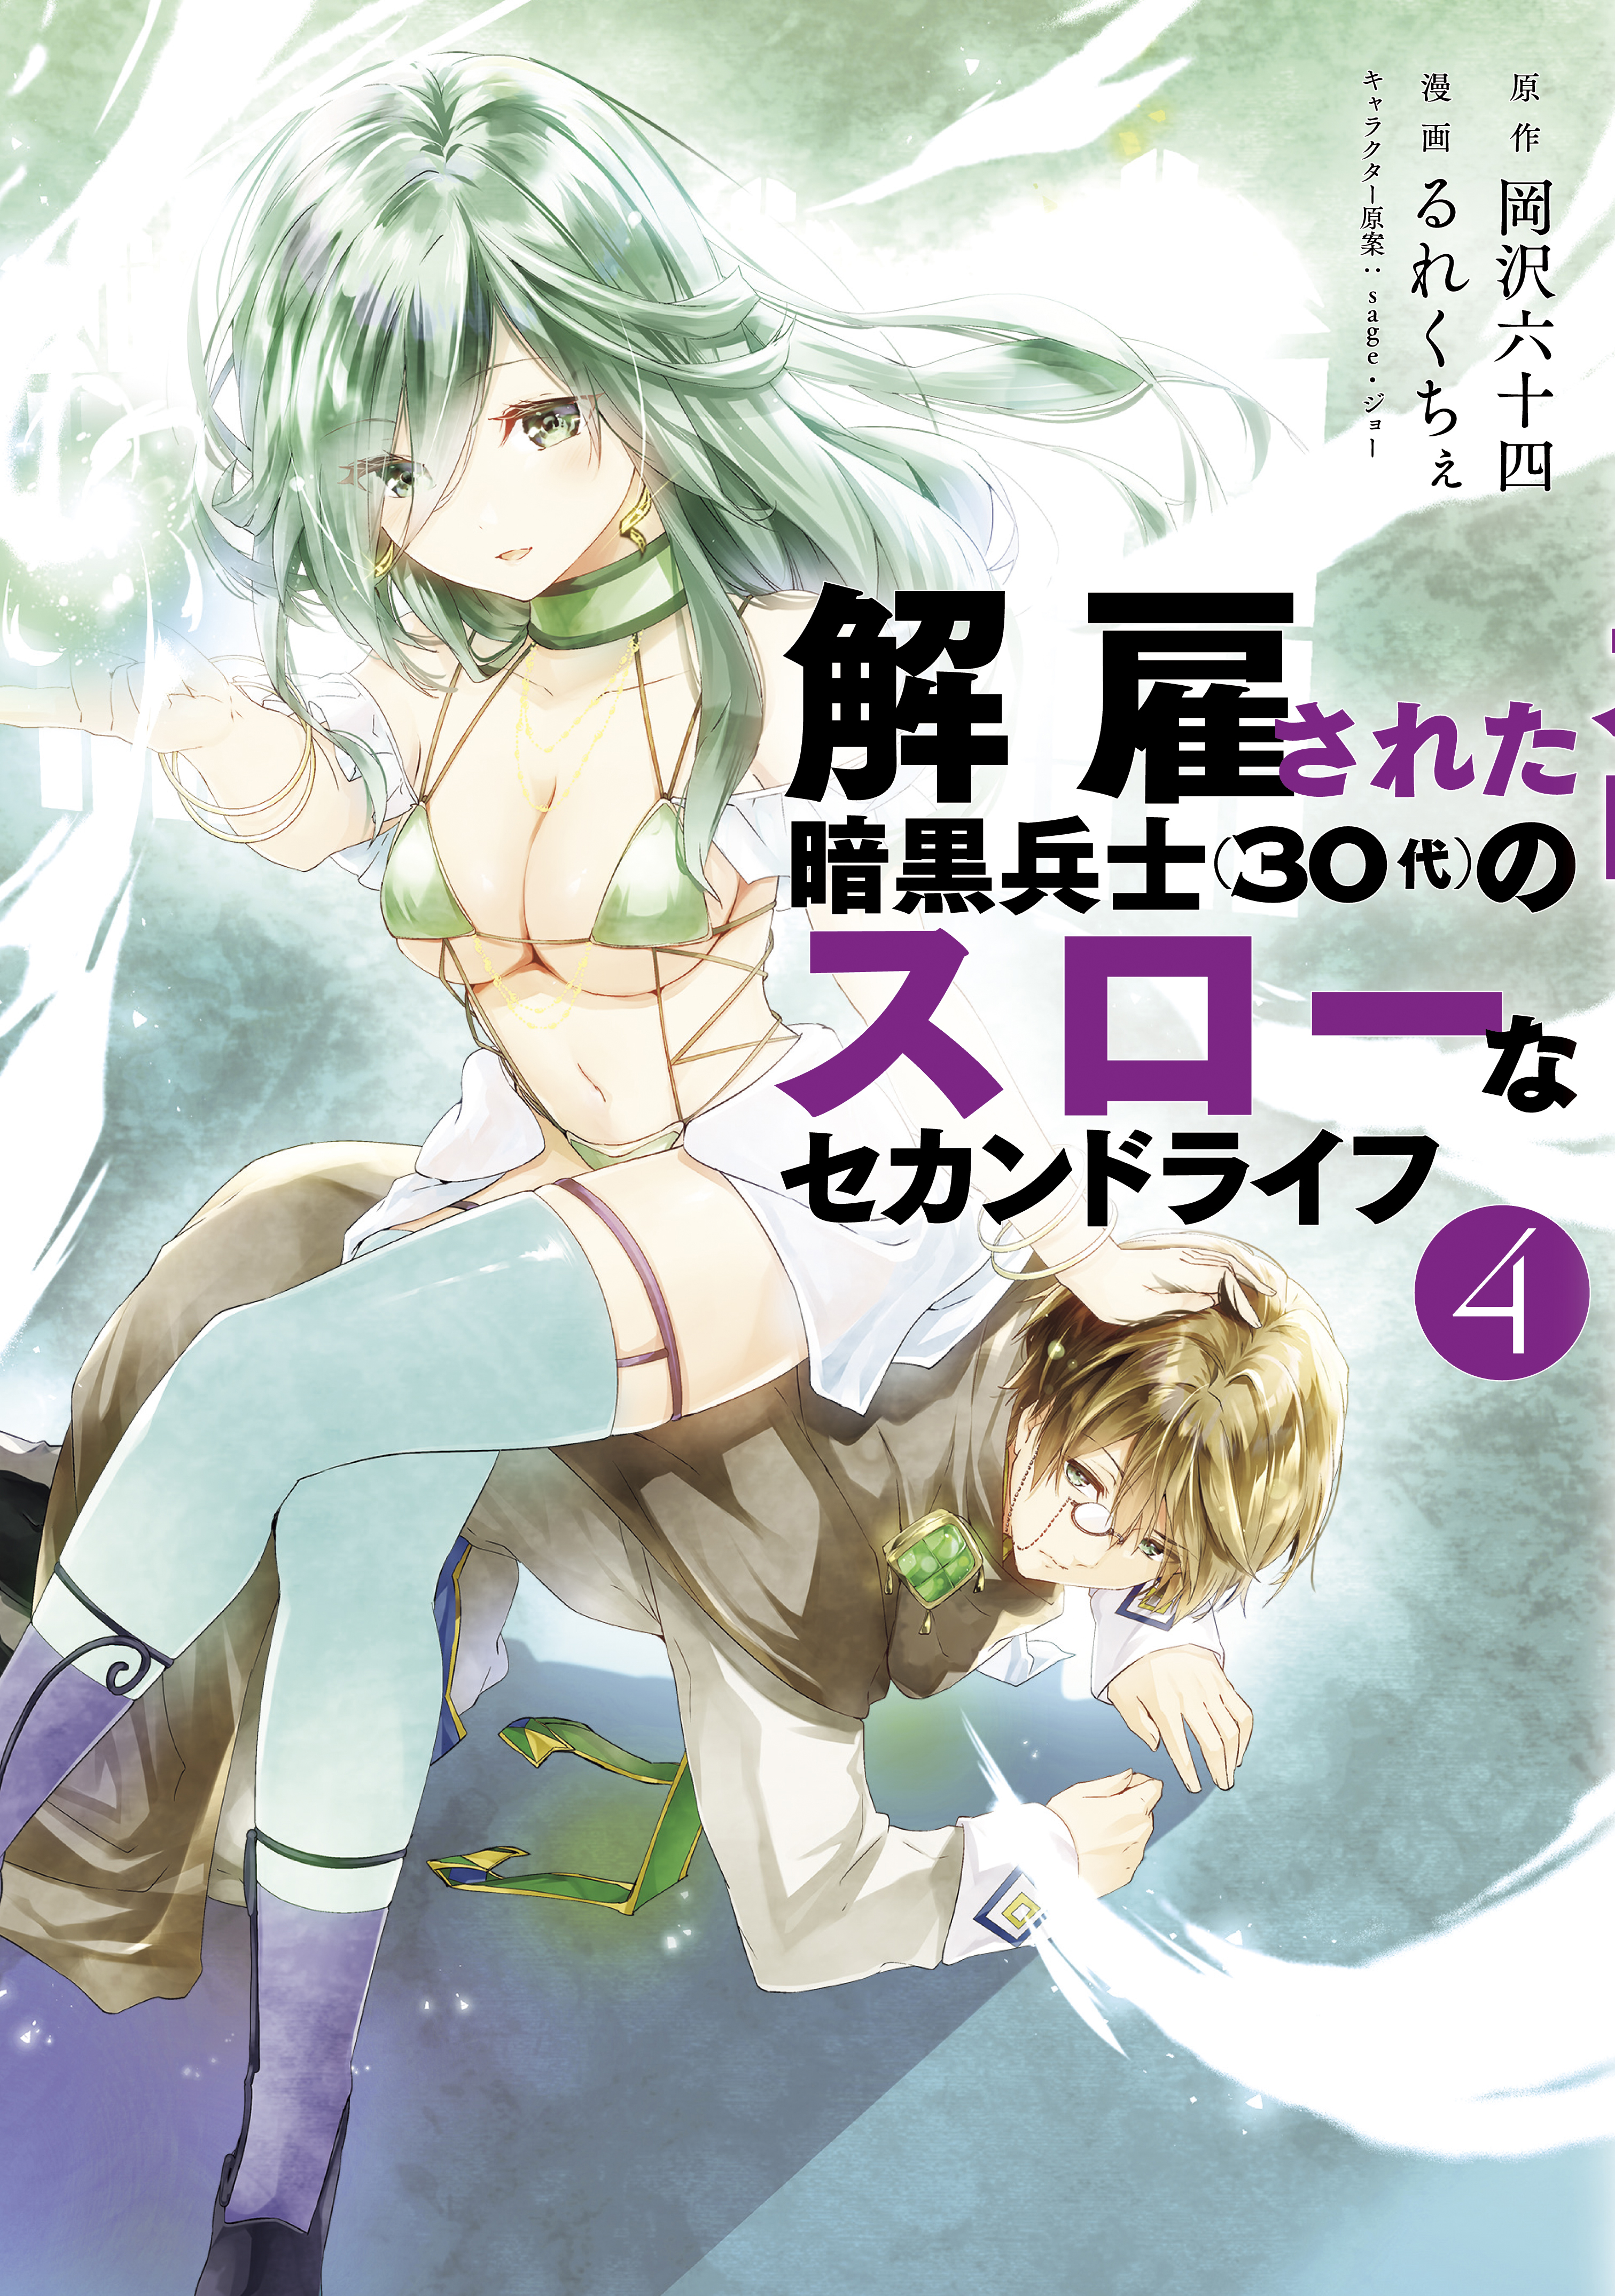 Ankoku Heishi manga 4.jpg